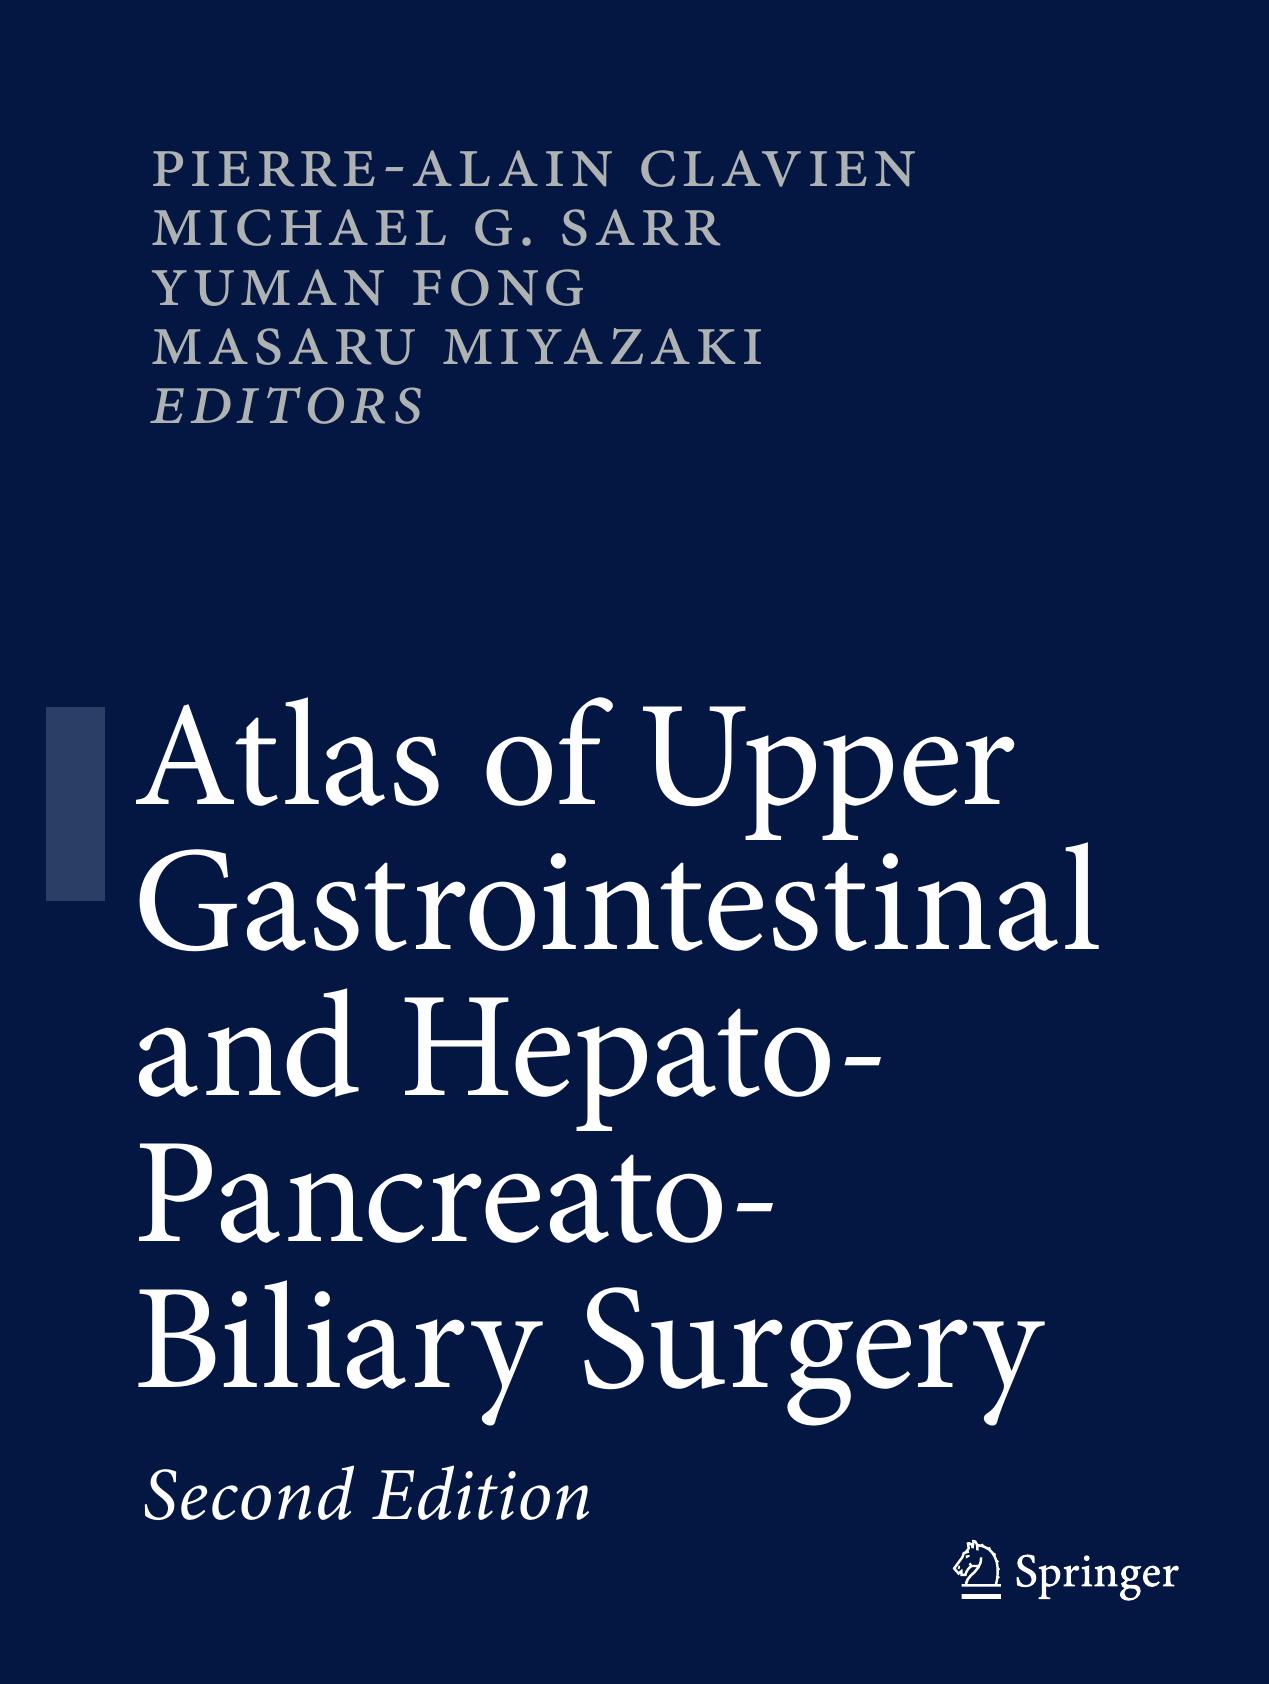 Atlas of Upper Gastrointestinal and Hepato-Pancreato-Biliary Surgery 2016